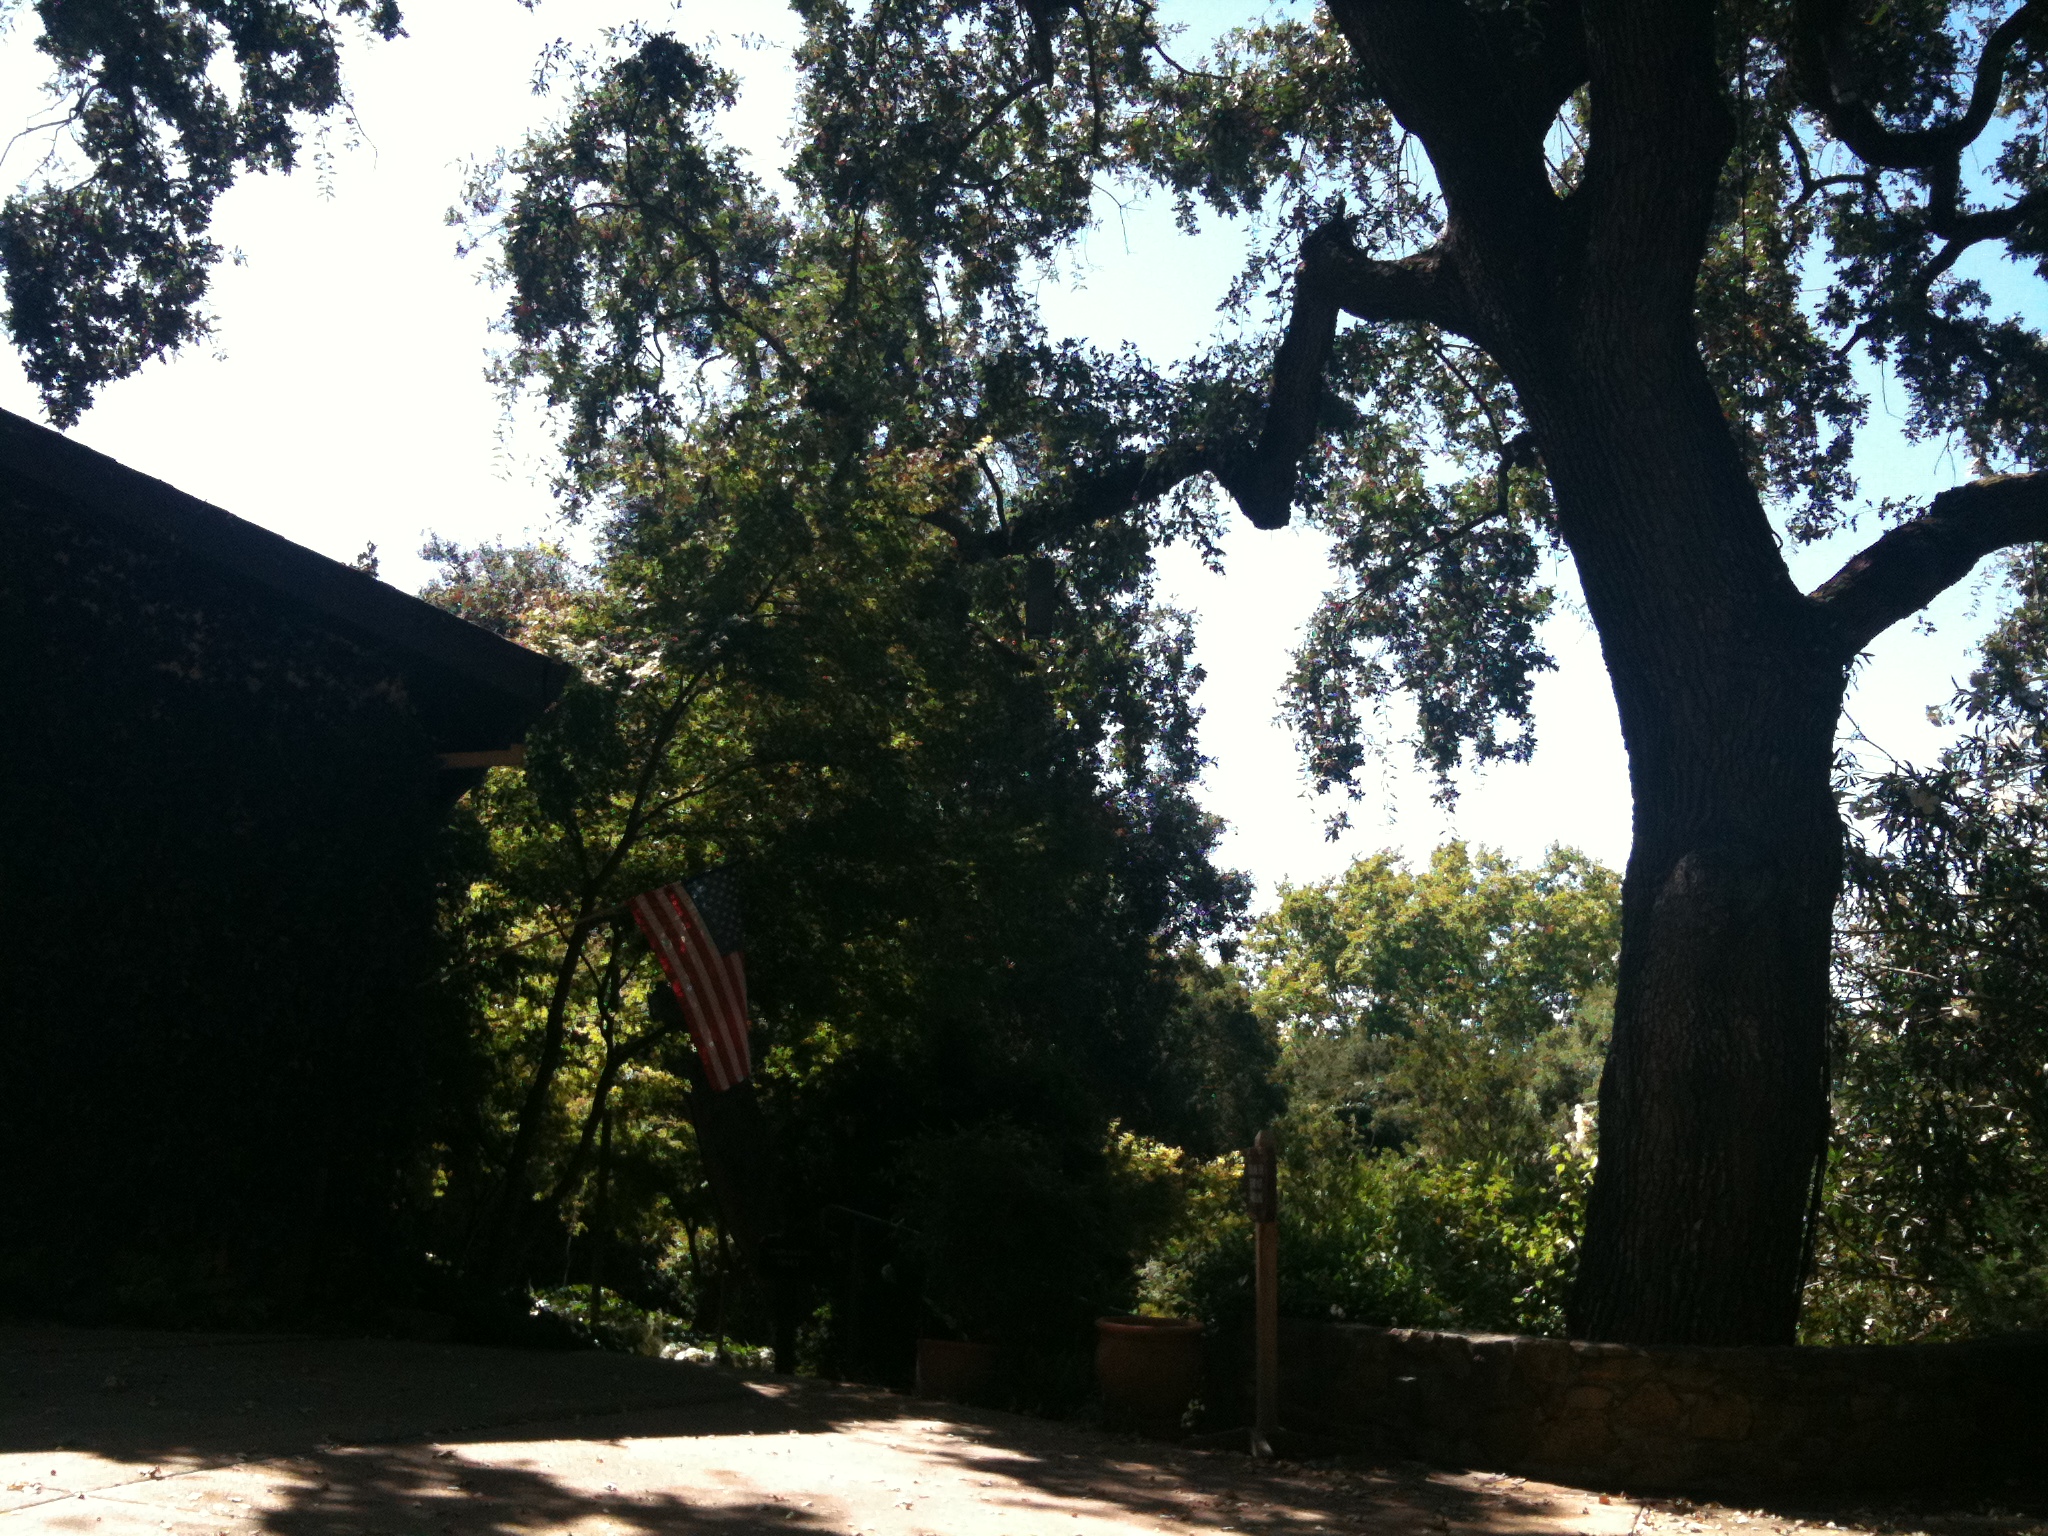 an american flag hangs from a tree near a barn